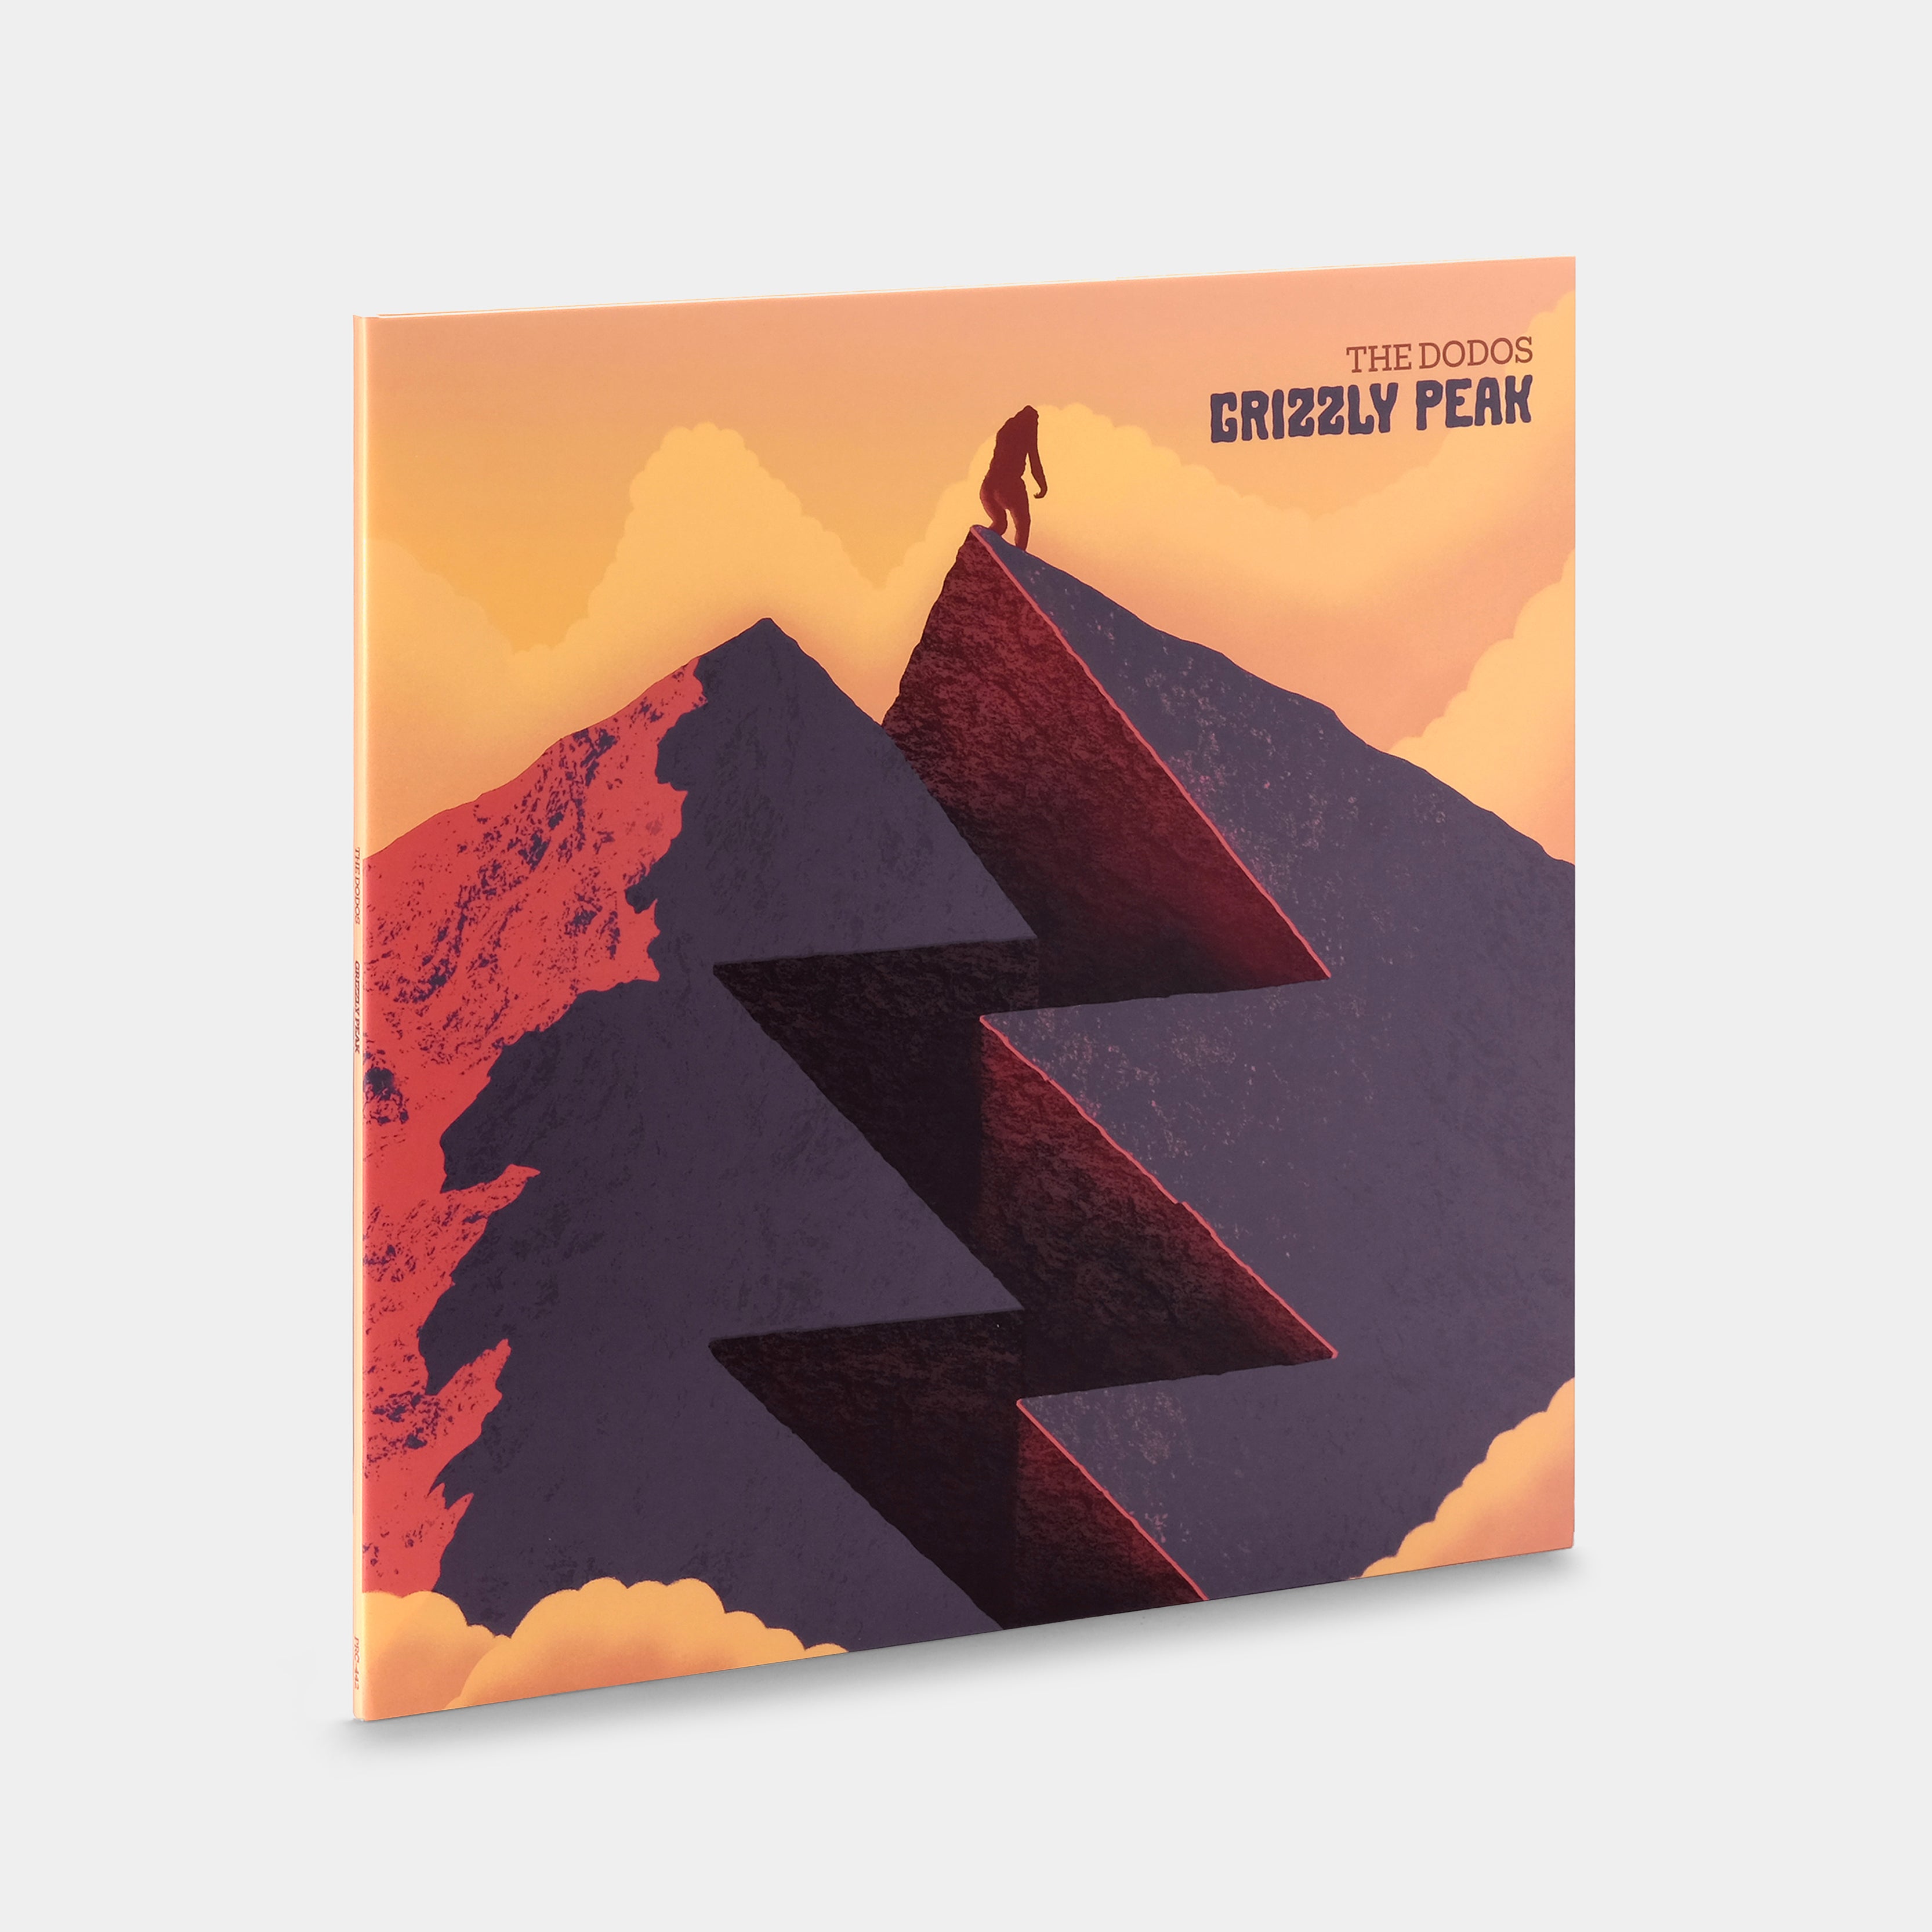 The Dodos - Grizzly Peak LP Light Pink Vinyl Record